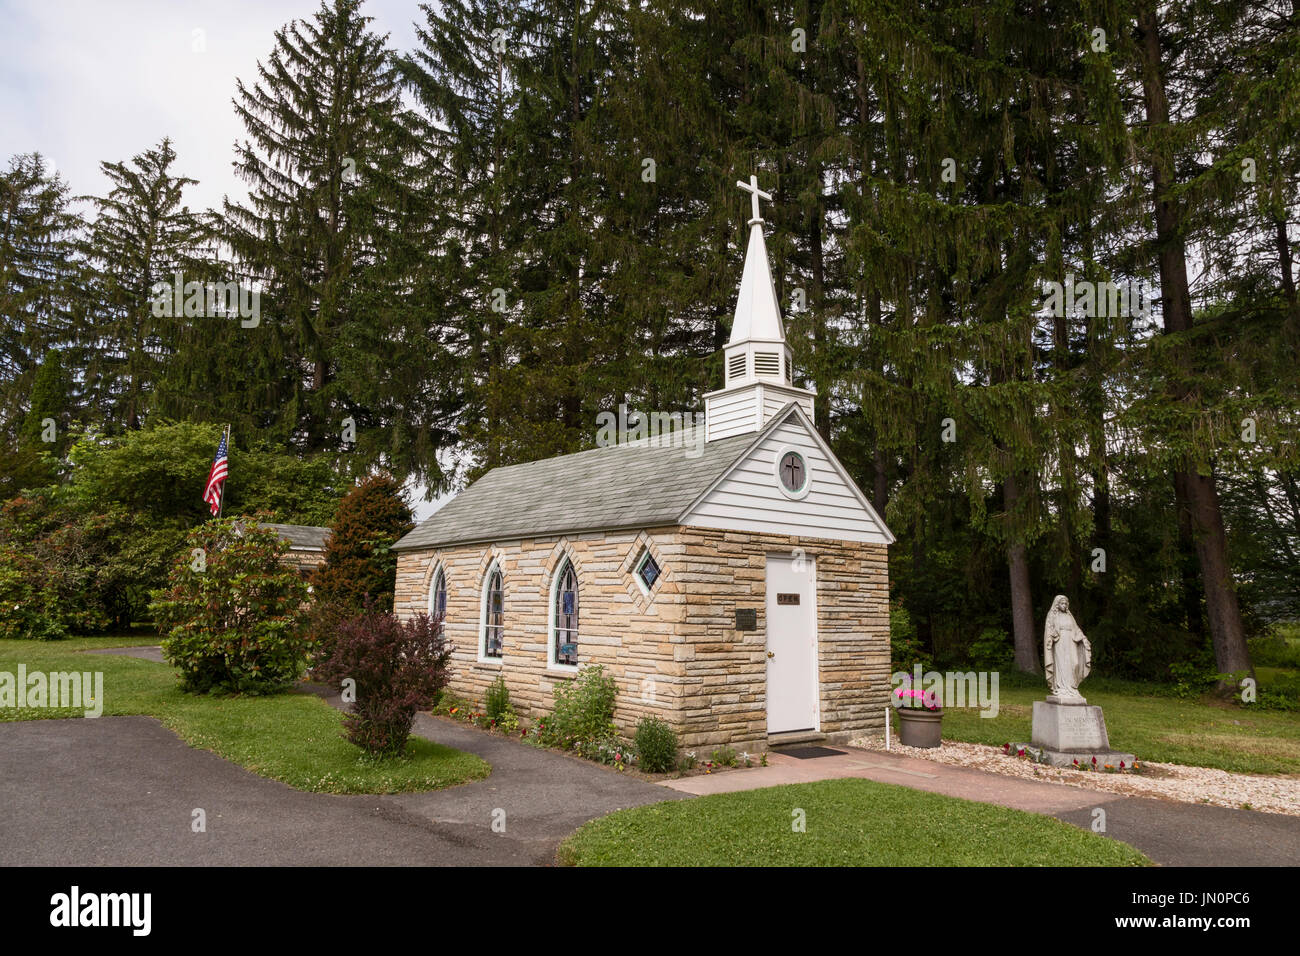 Silver Lake, West Virginia - Our Lady of Pines Catholic Church, soll die kleinste Kirche in den kontinentalen 48 Staaten sein. Stockfoto